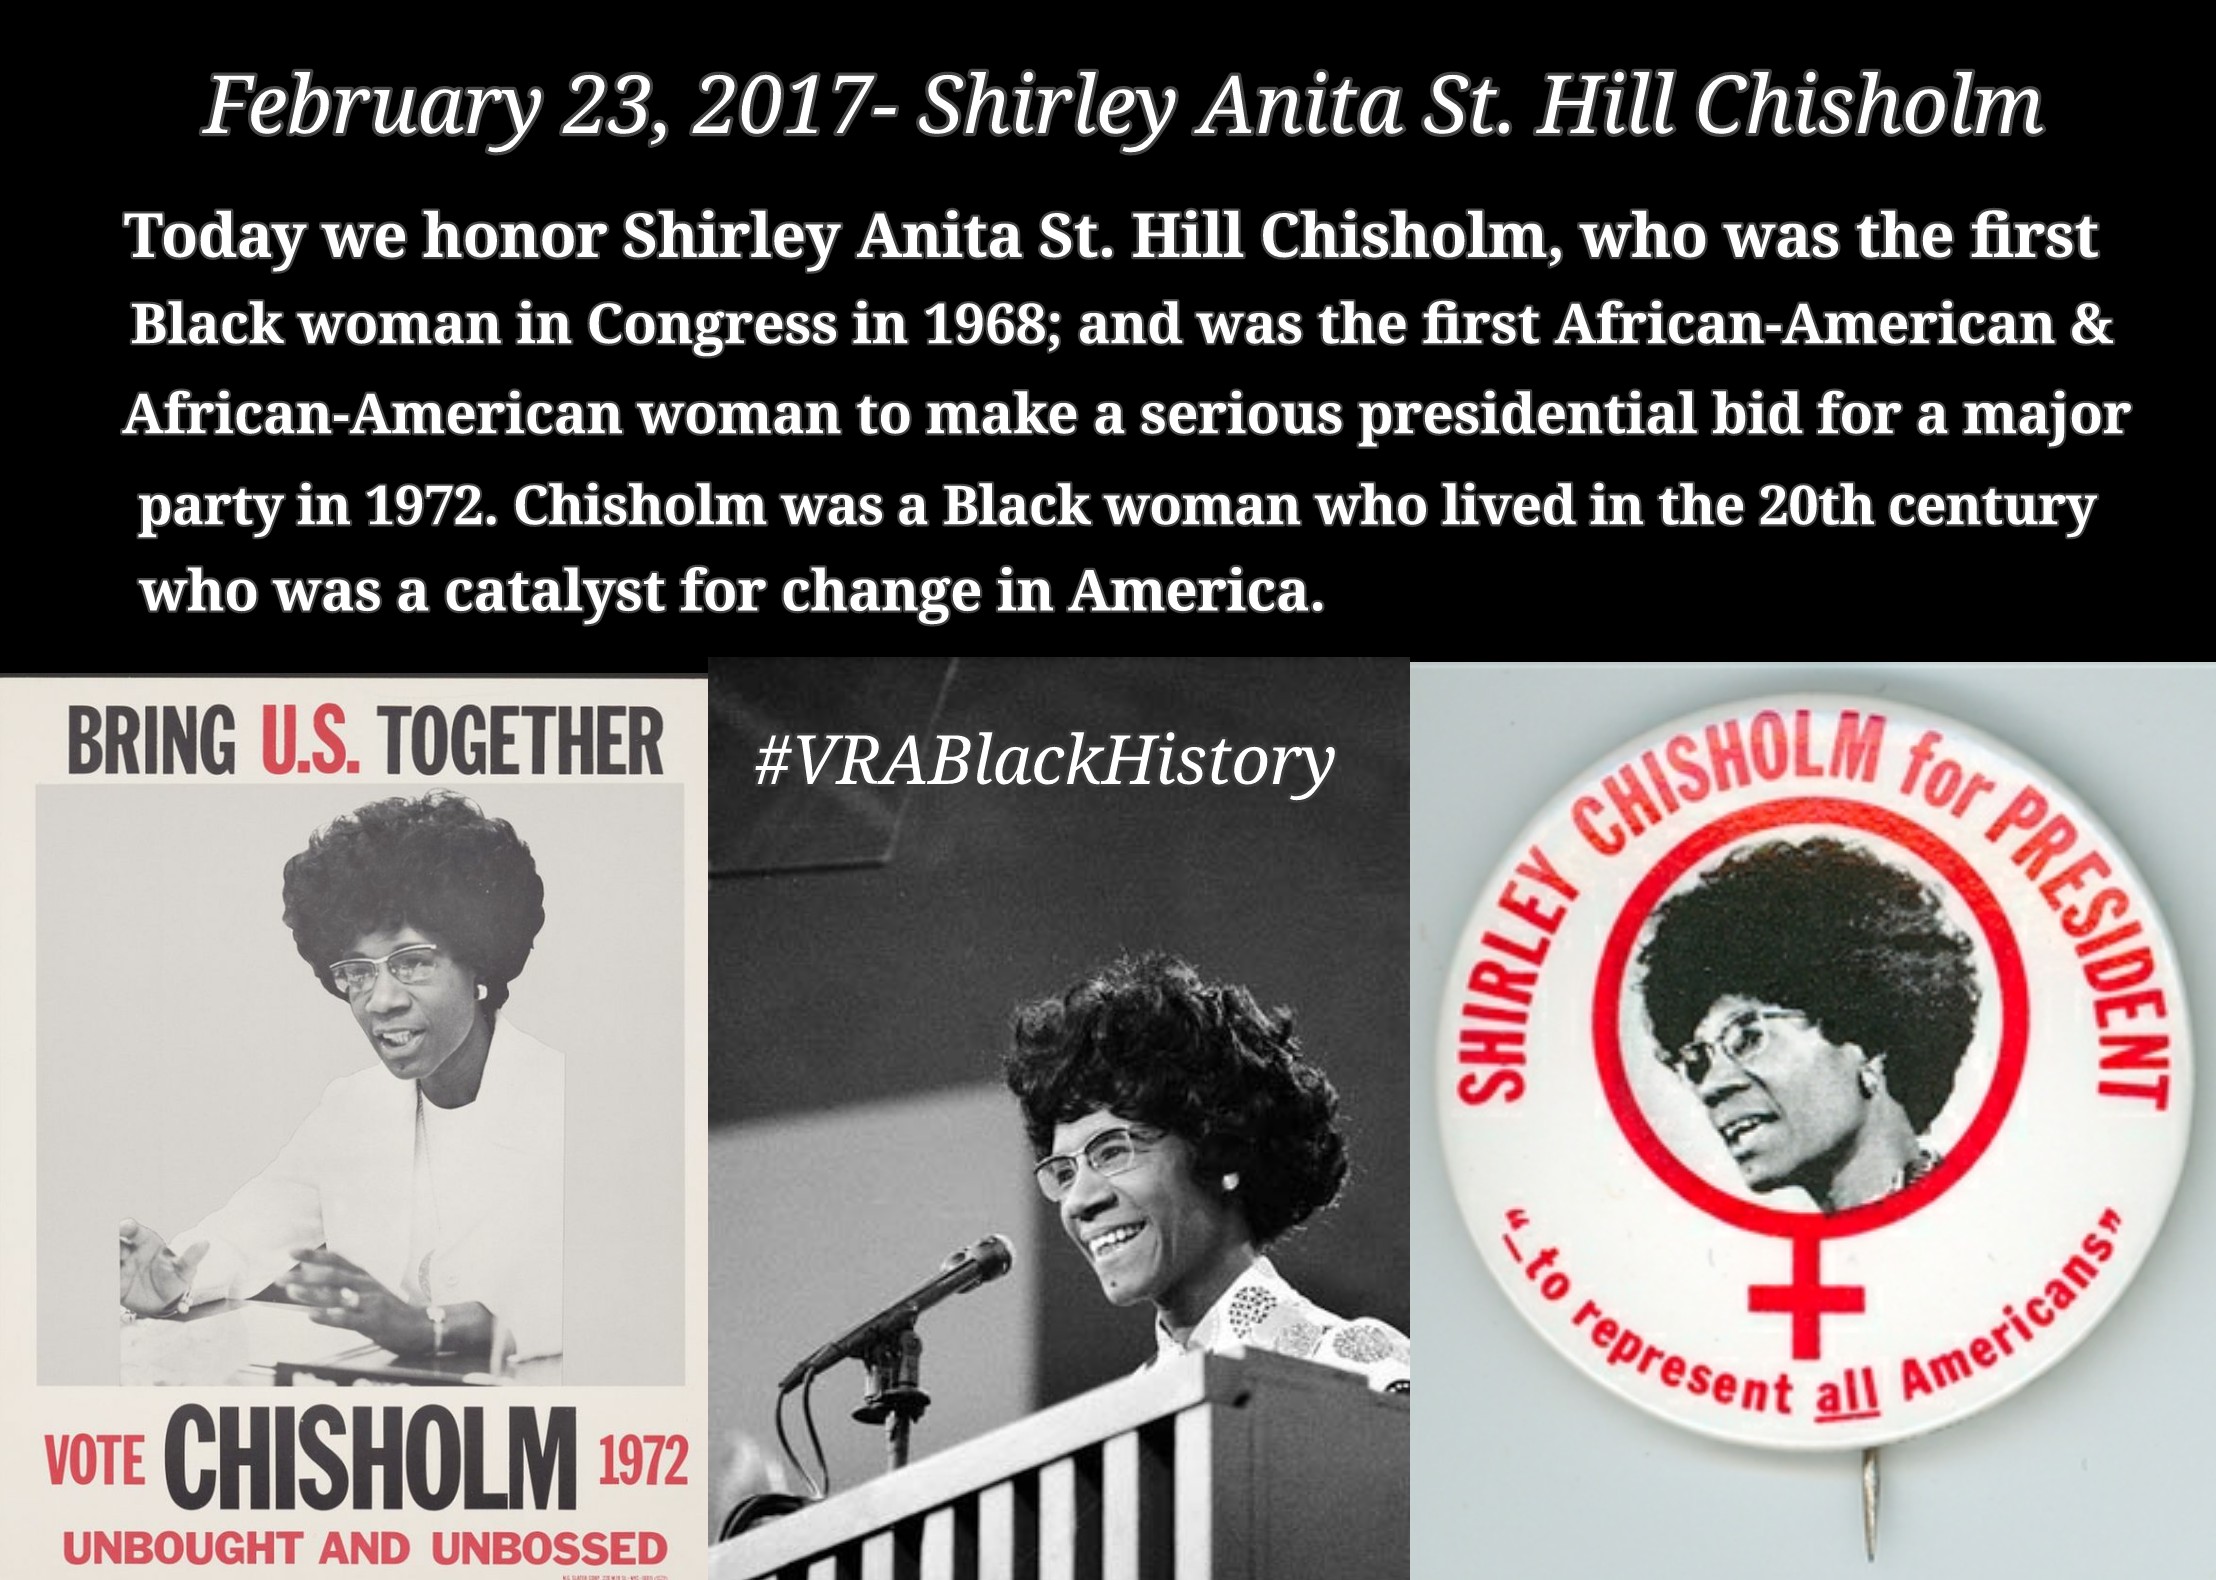 February 25 - Shirley Anita St. Hill Chisholm